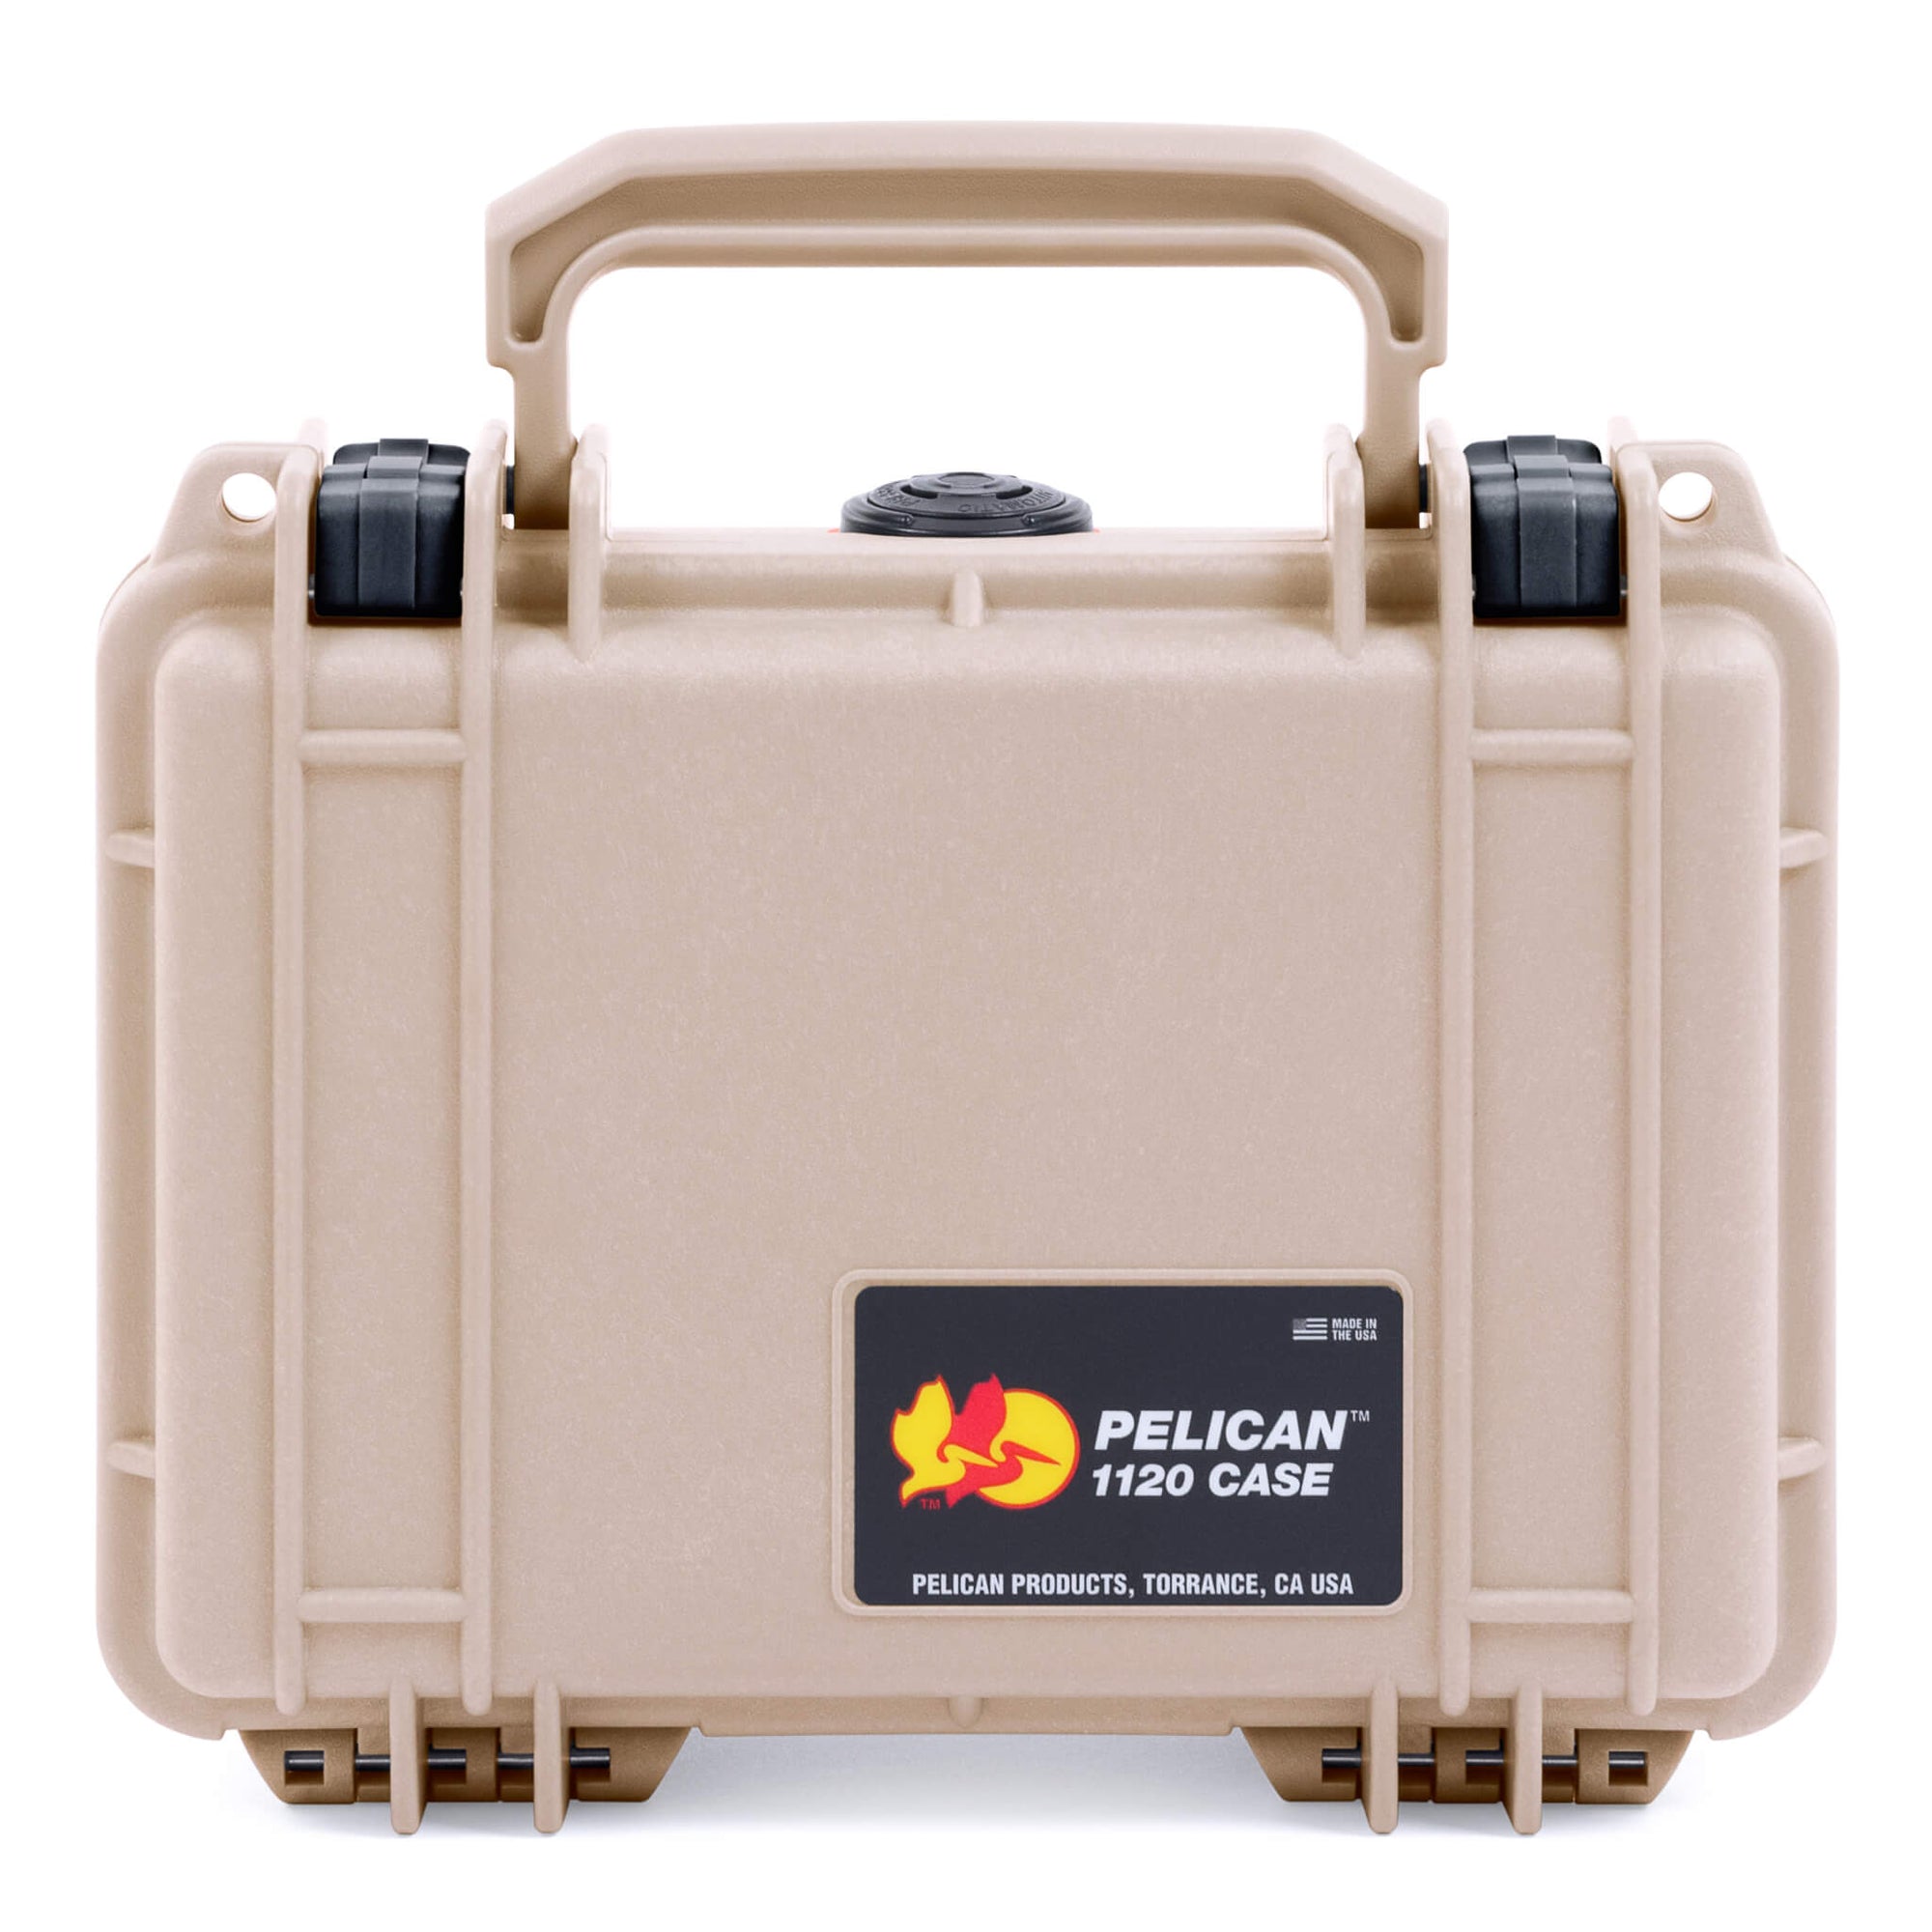 Pelican 1120 Case, Desert Tan with Black Latches ColorCase 